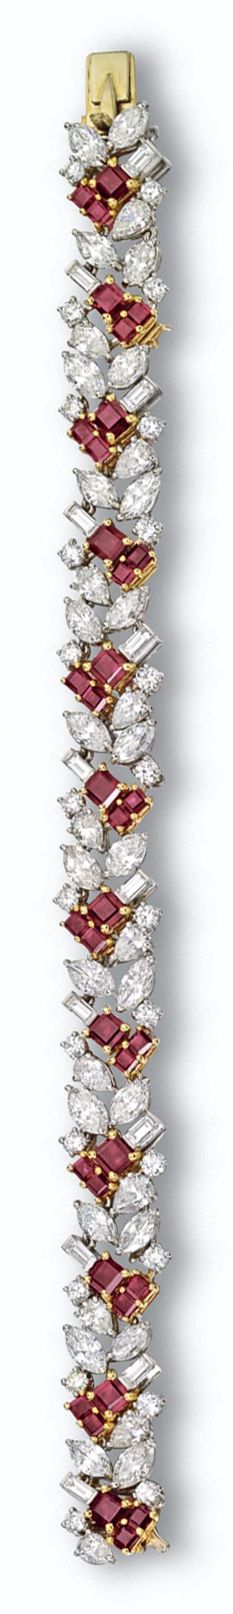 RUBY AND DIAMOND BRACELET, CARTIER. The stylized foliate motif set with 12 pear-...